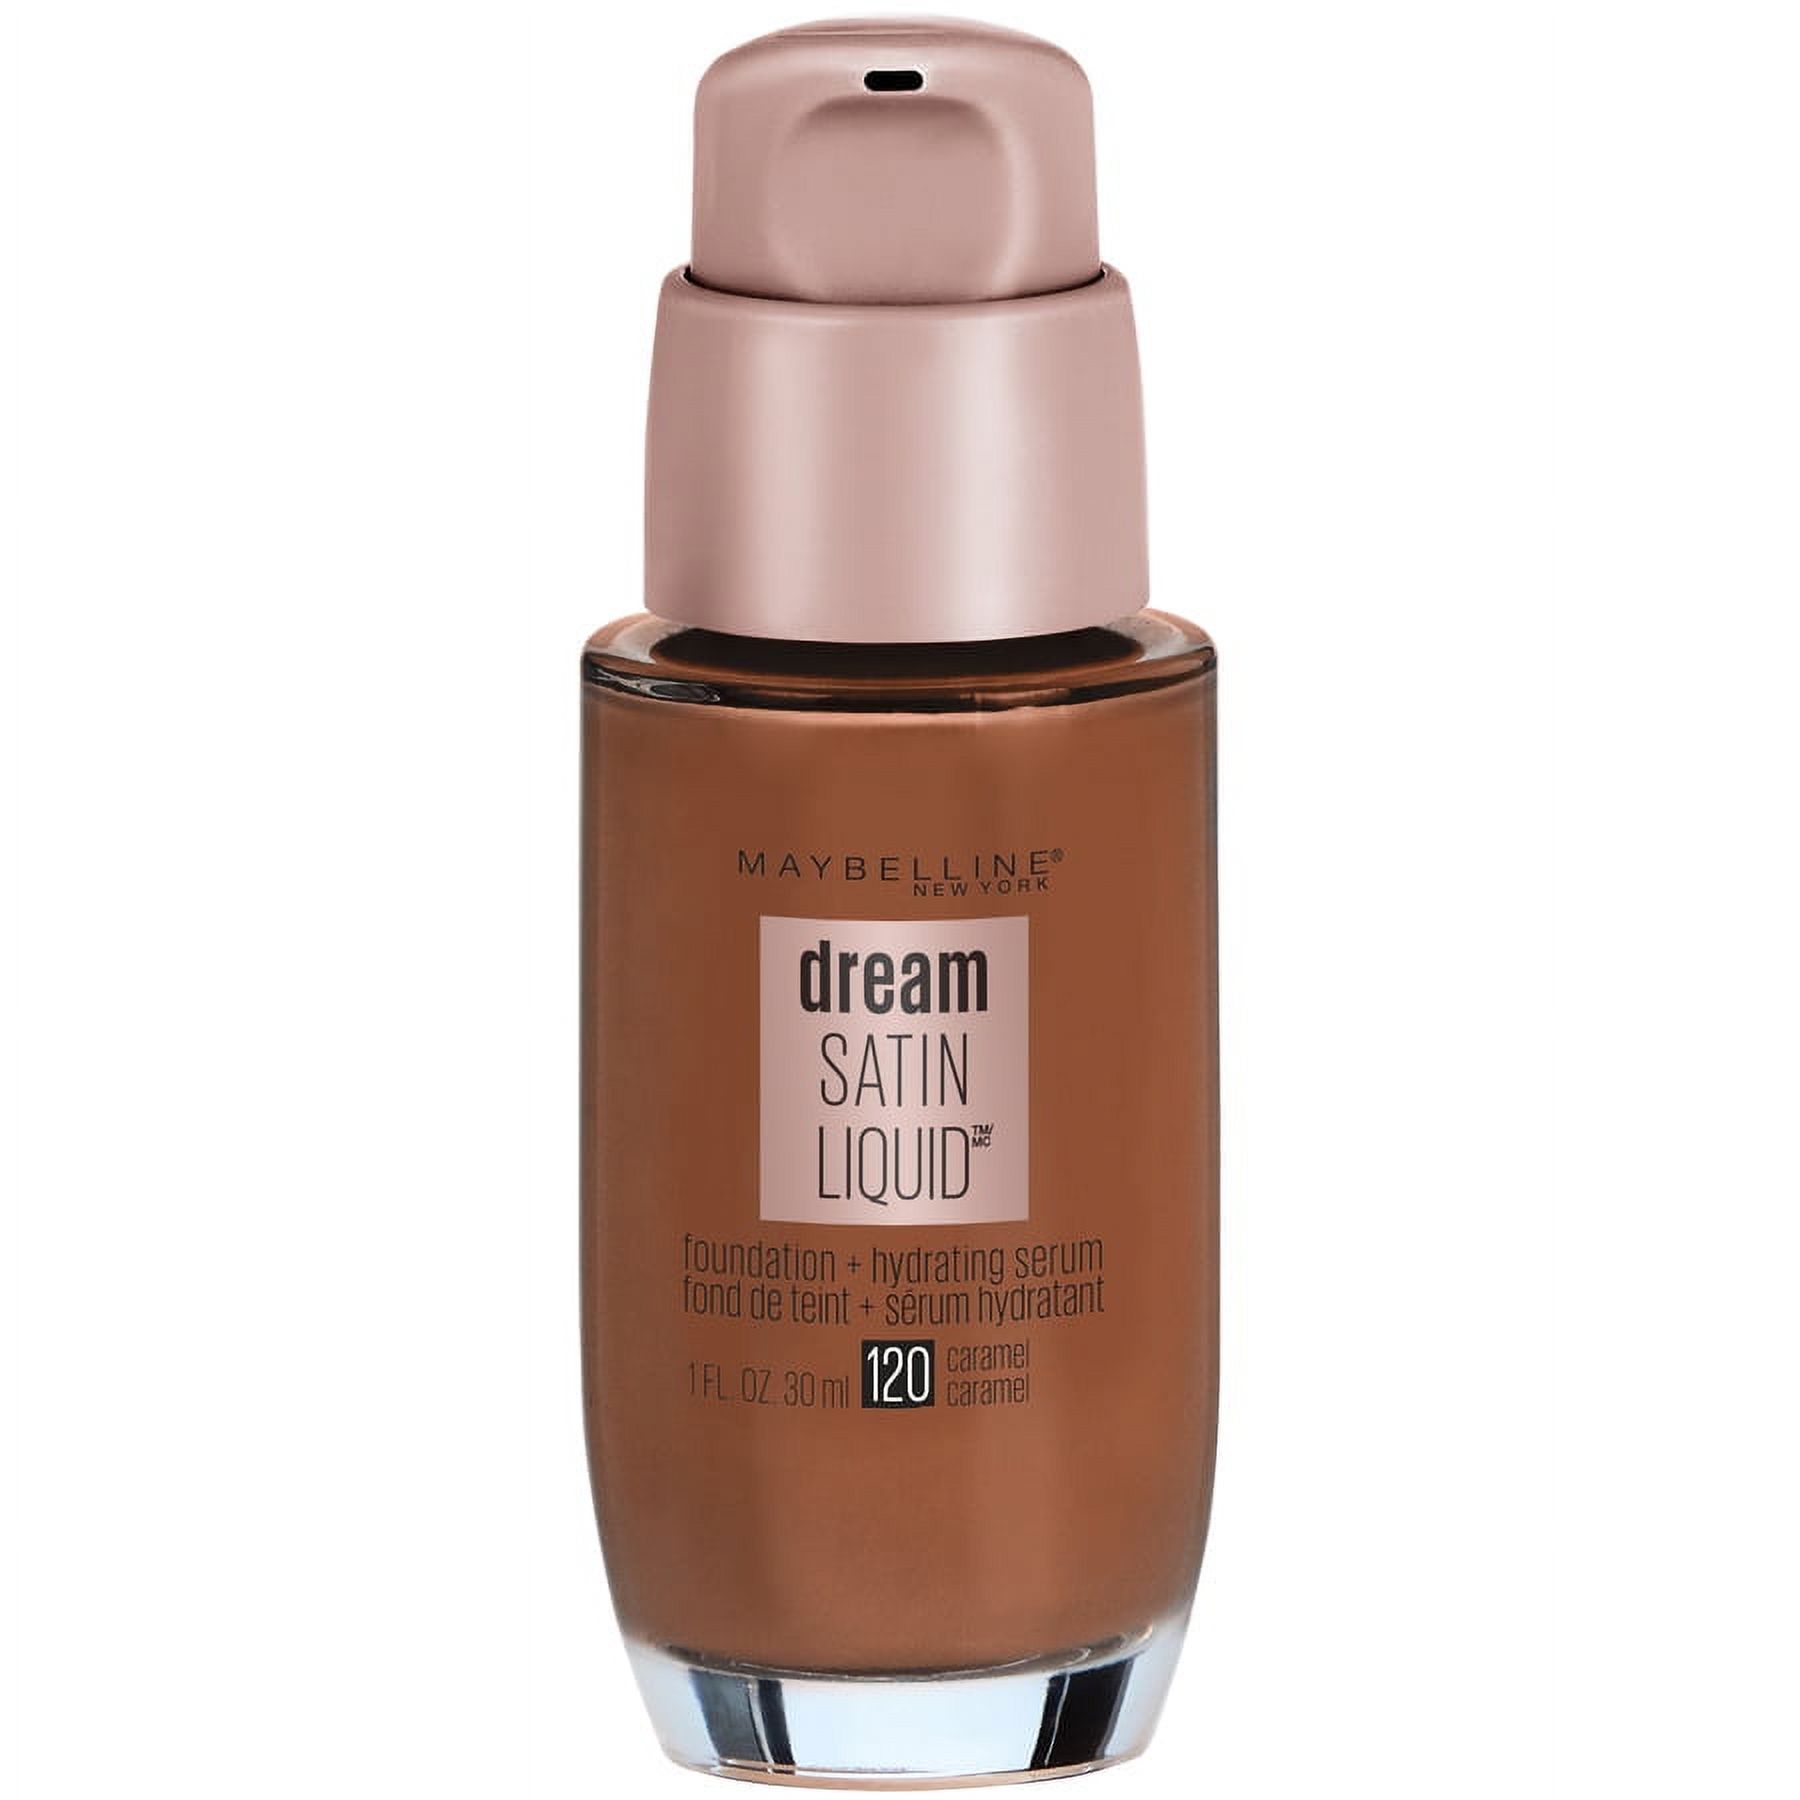 Maybelline Dream Satin Liquid Foundation Makeup for All Skin, Caramel, 1 fl oz - image 1 of 6